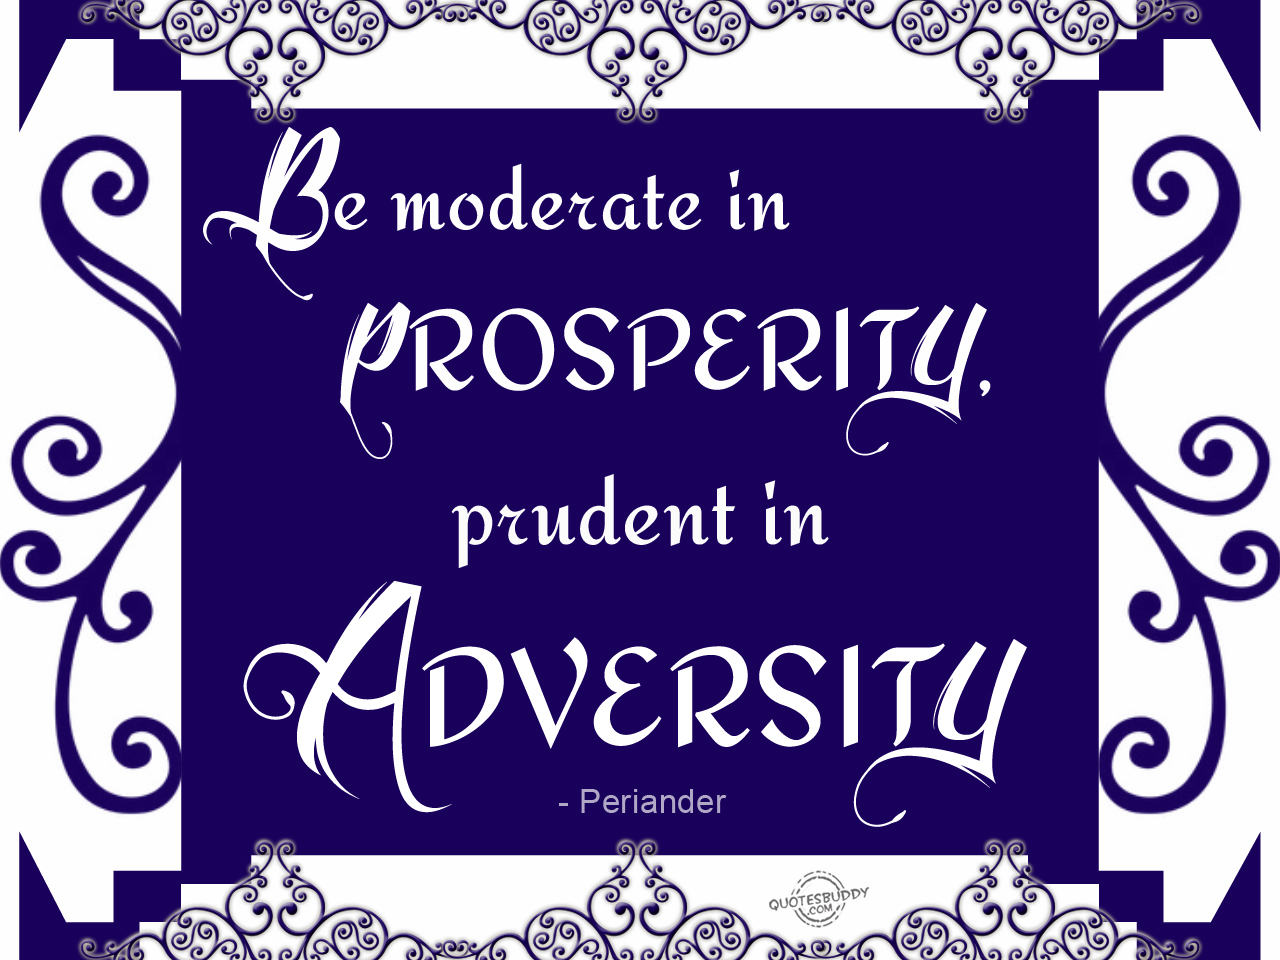 Be moderate in prosperity, prudent in adversity. Periander